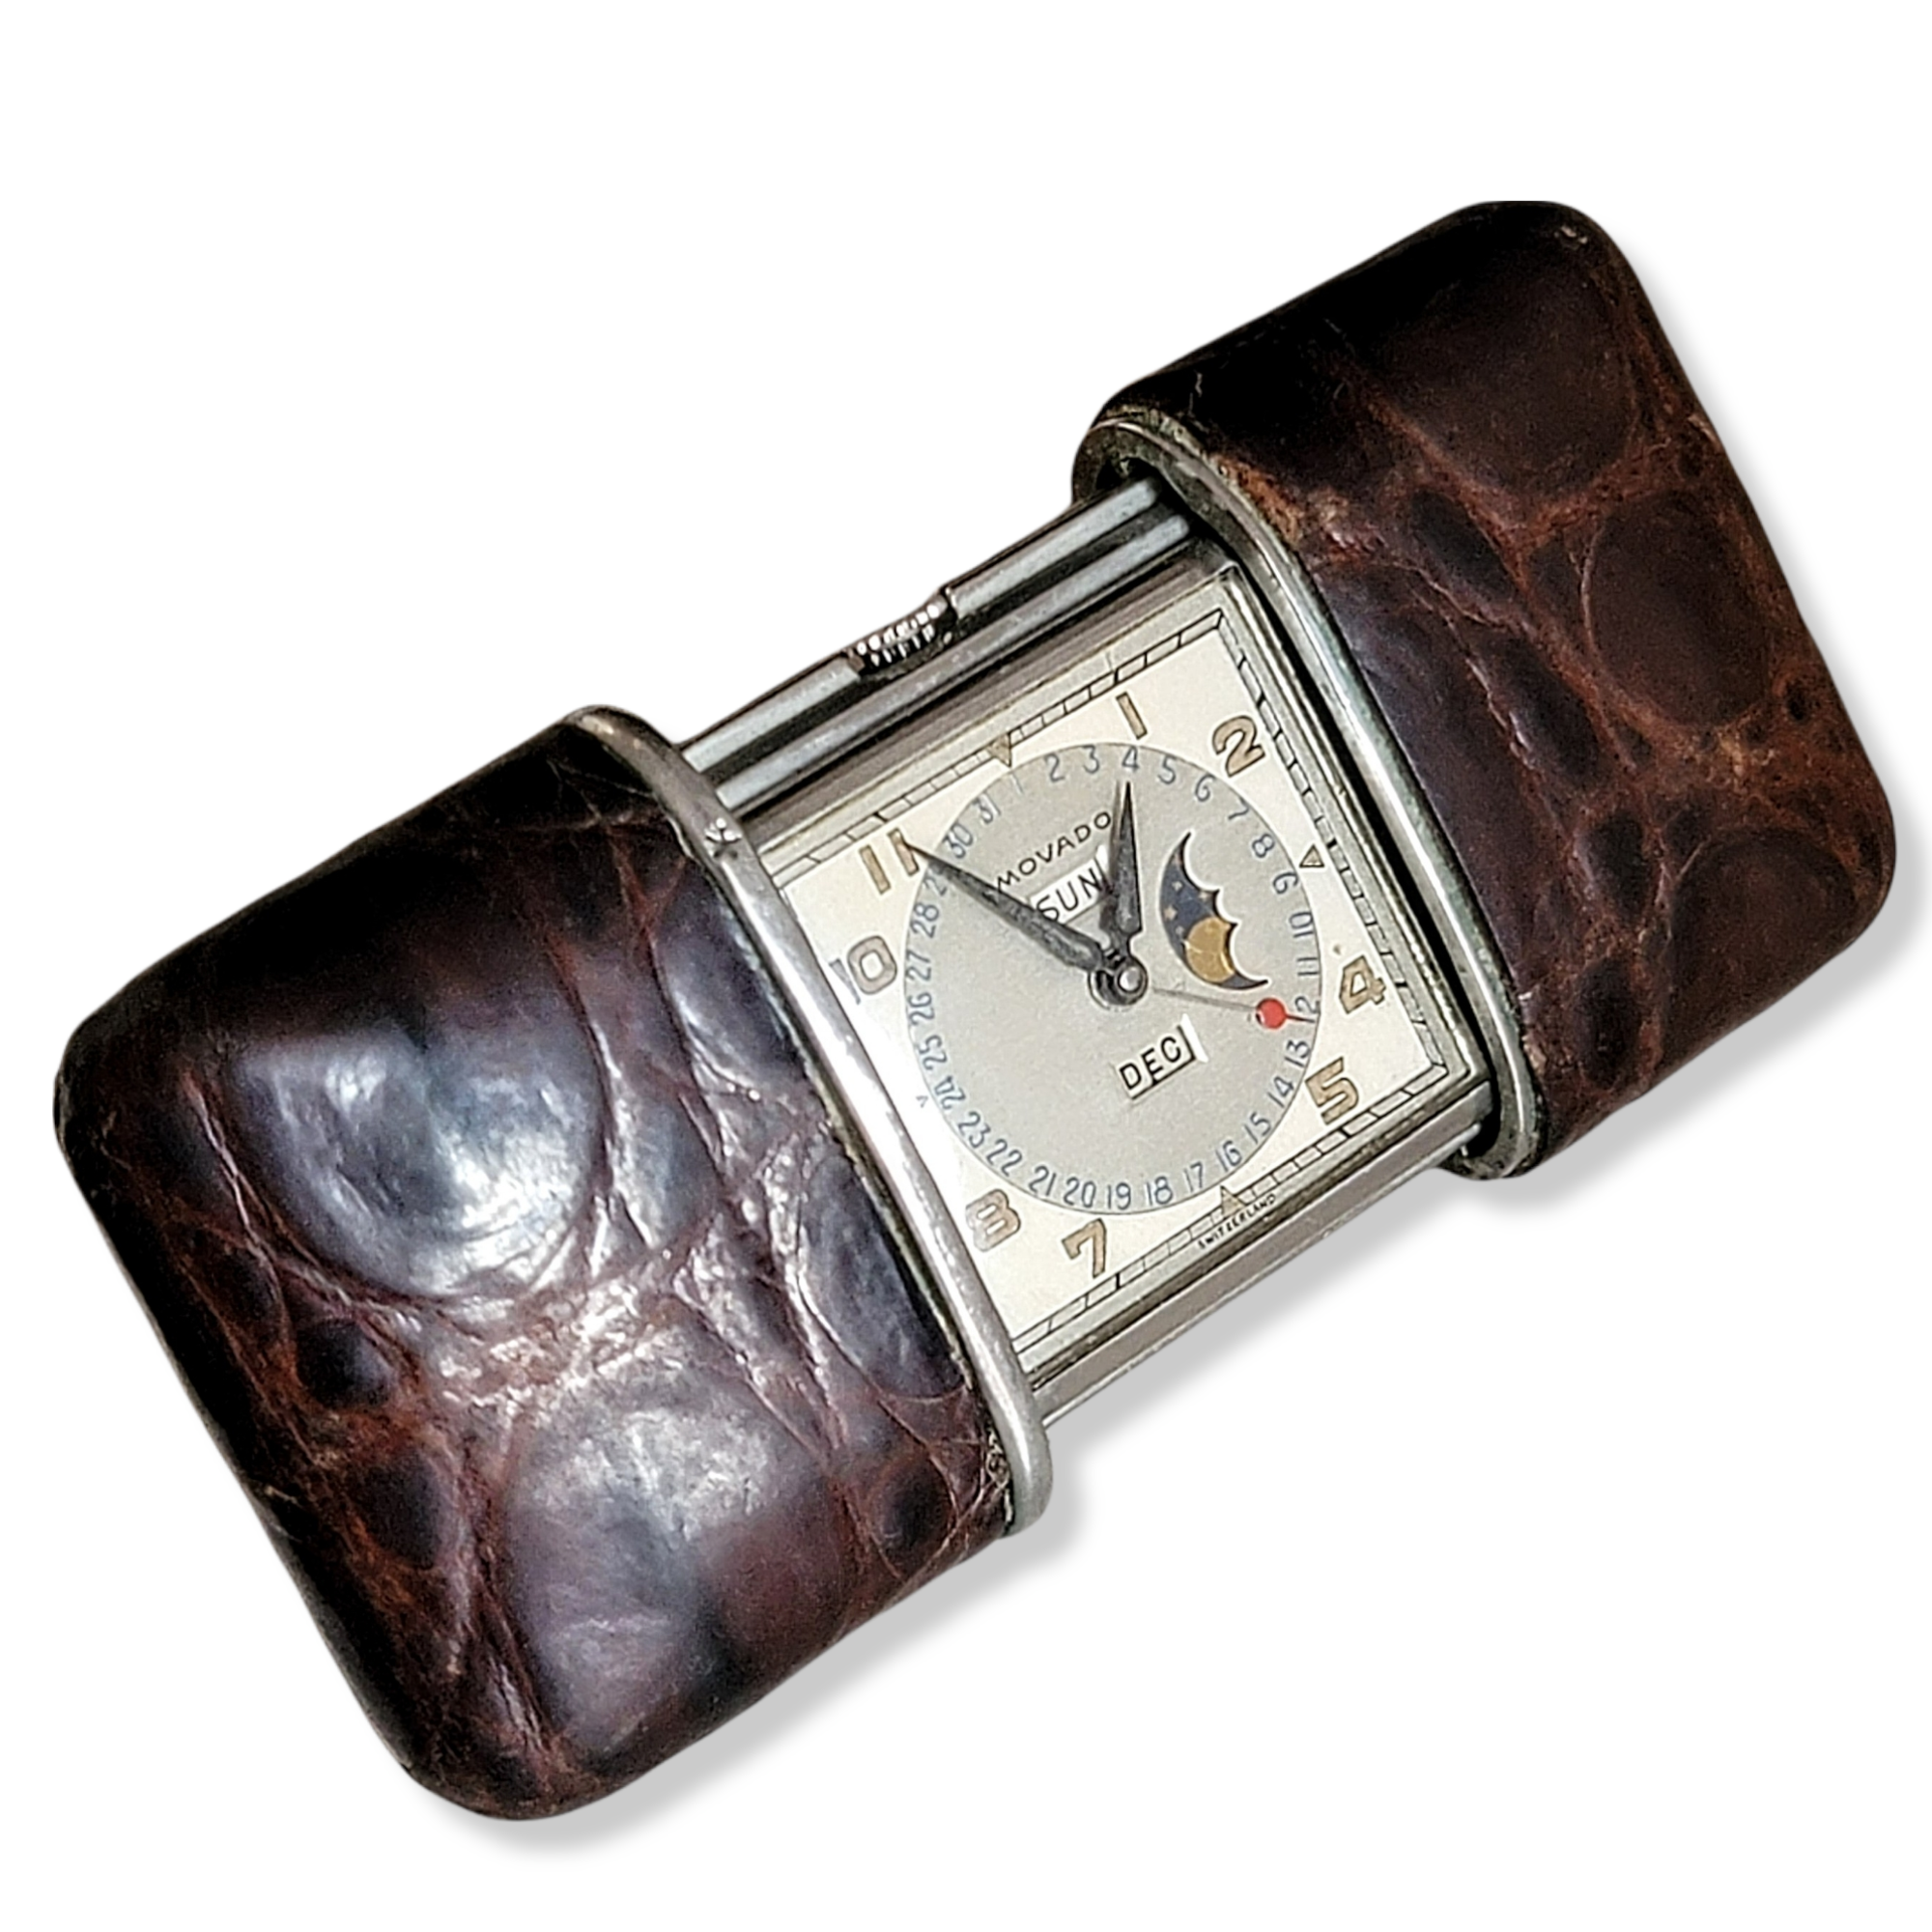 1940's Movado Ermeto Calendarmeto Triple Calendar Moonphase Watch